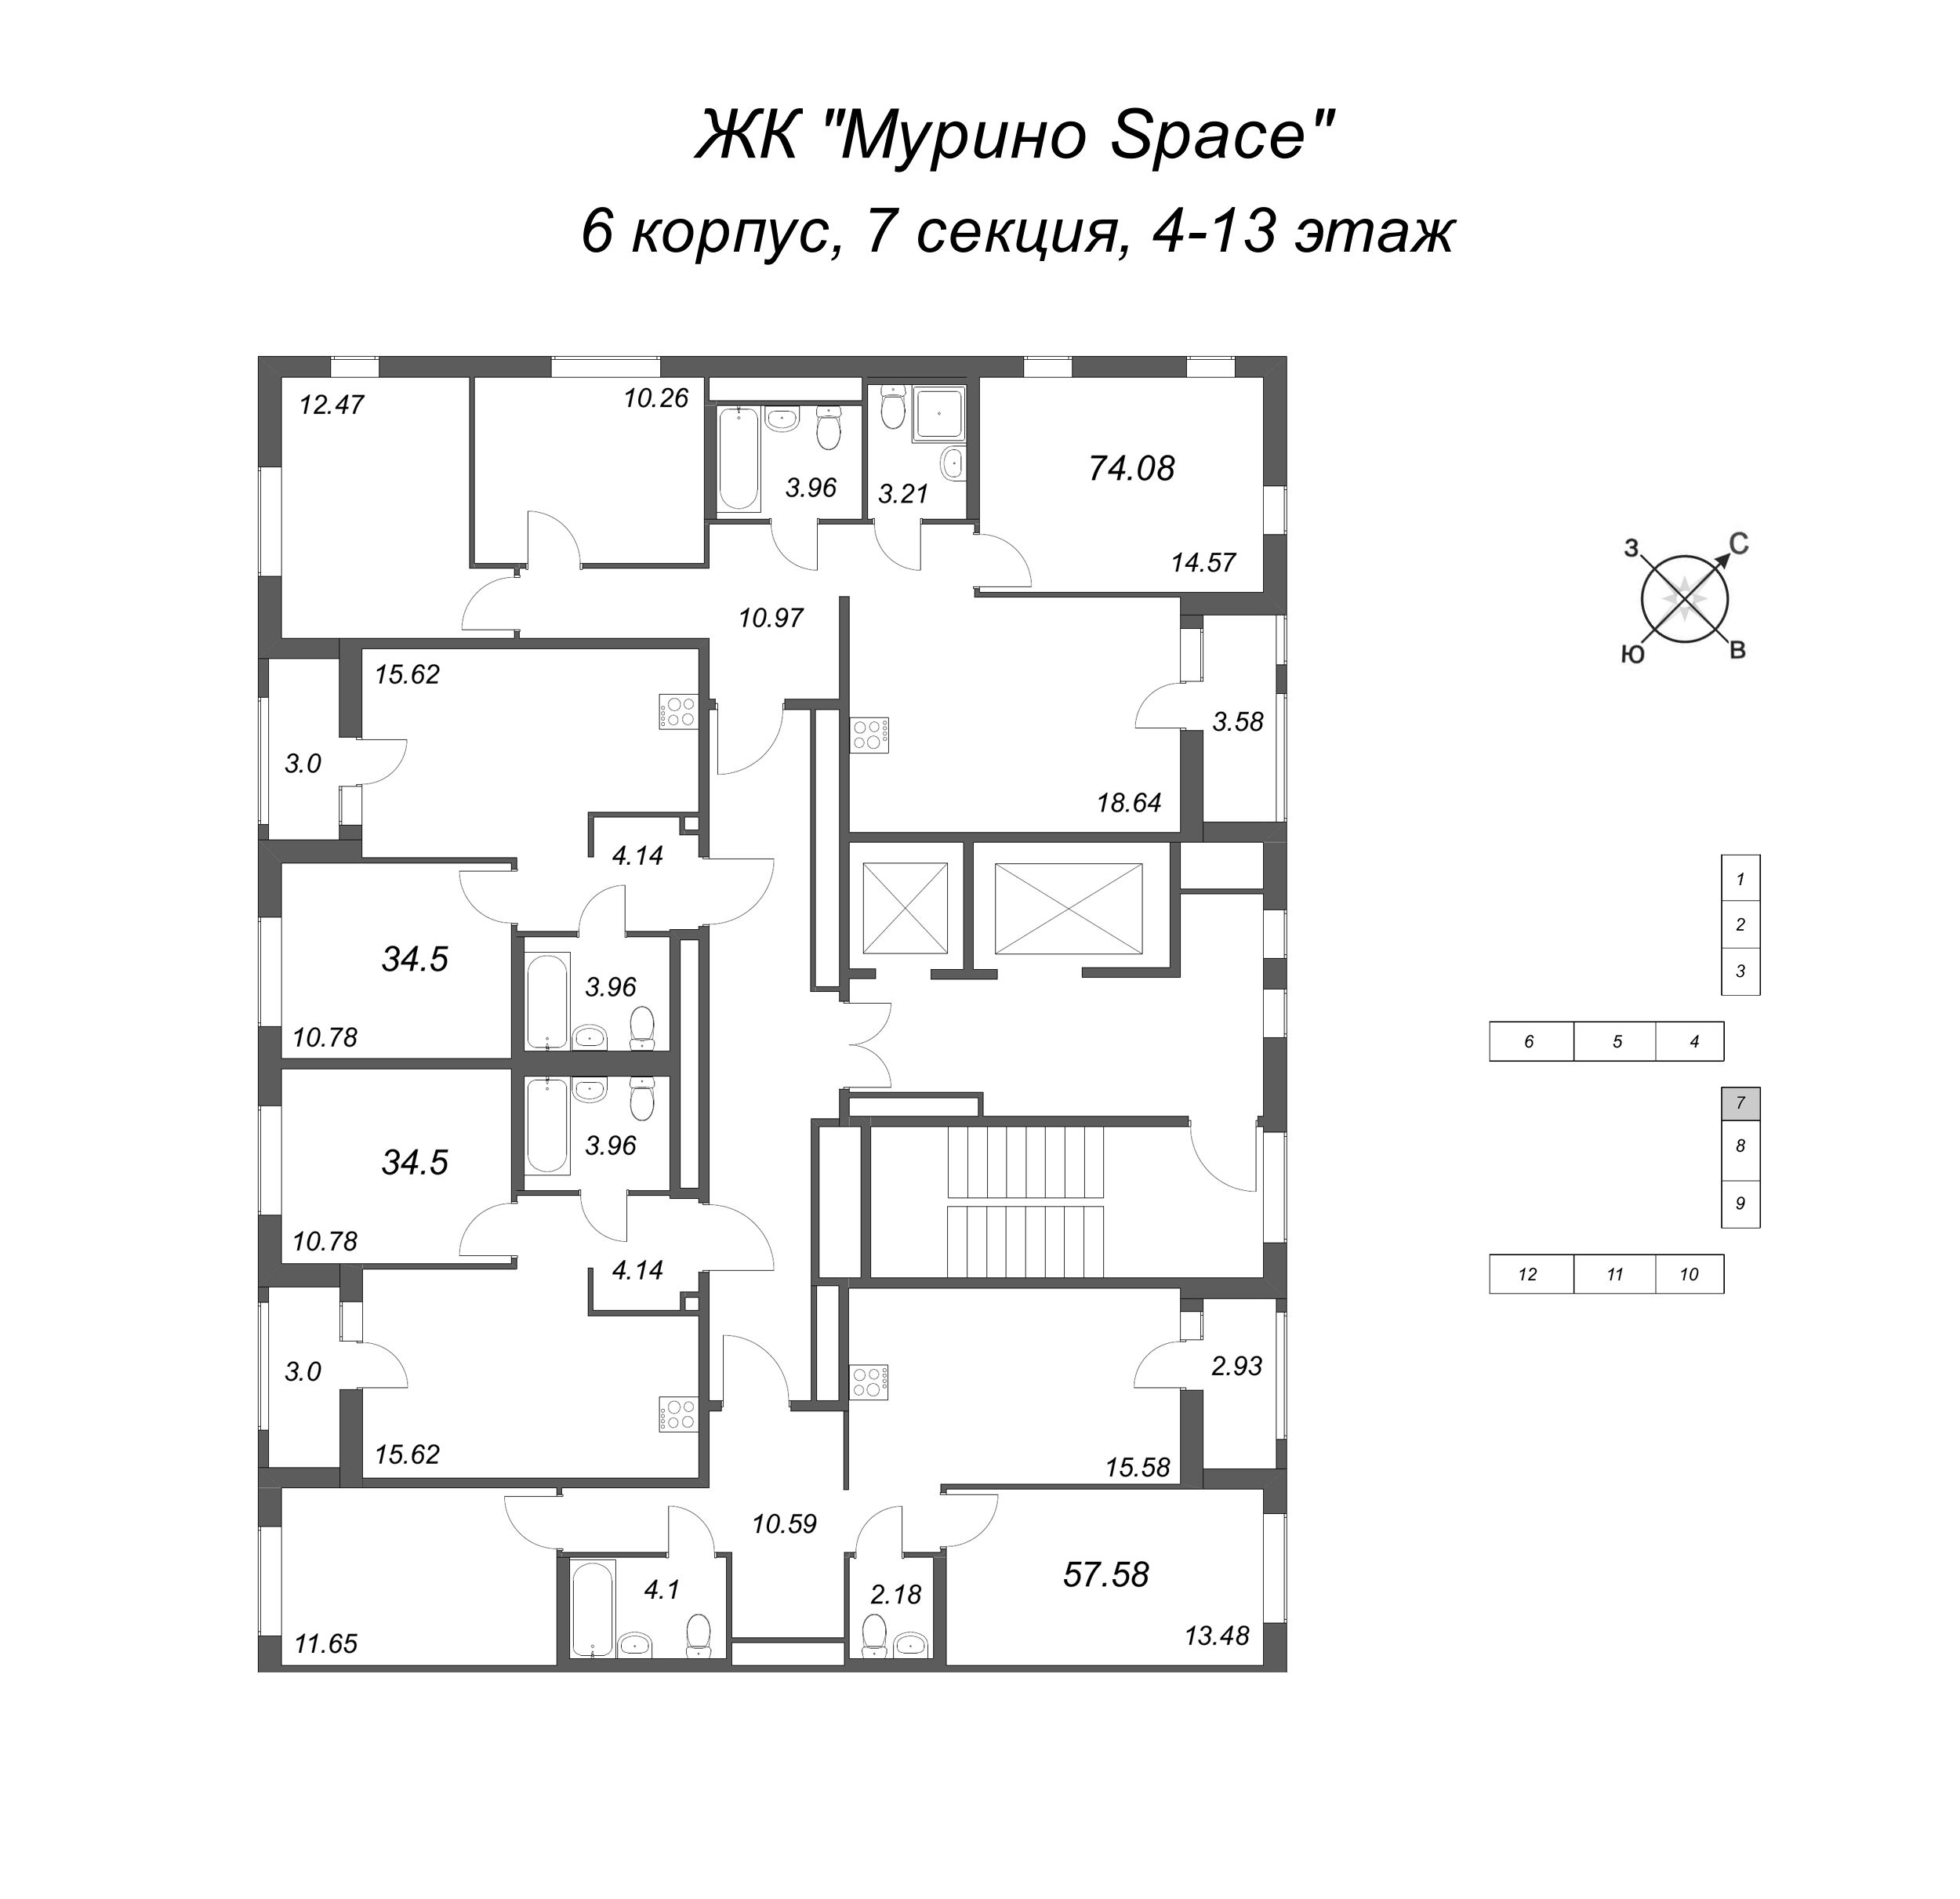 4-комнатная (Евро) квартира, 69.62 м² - планировка этажа